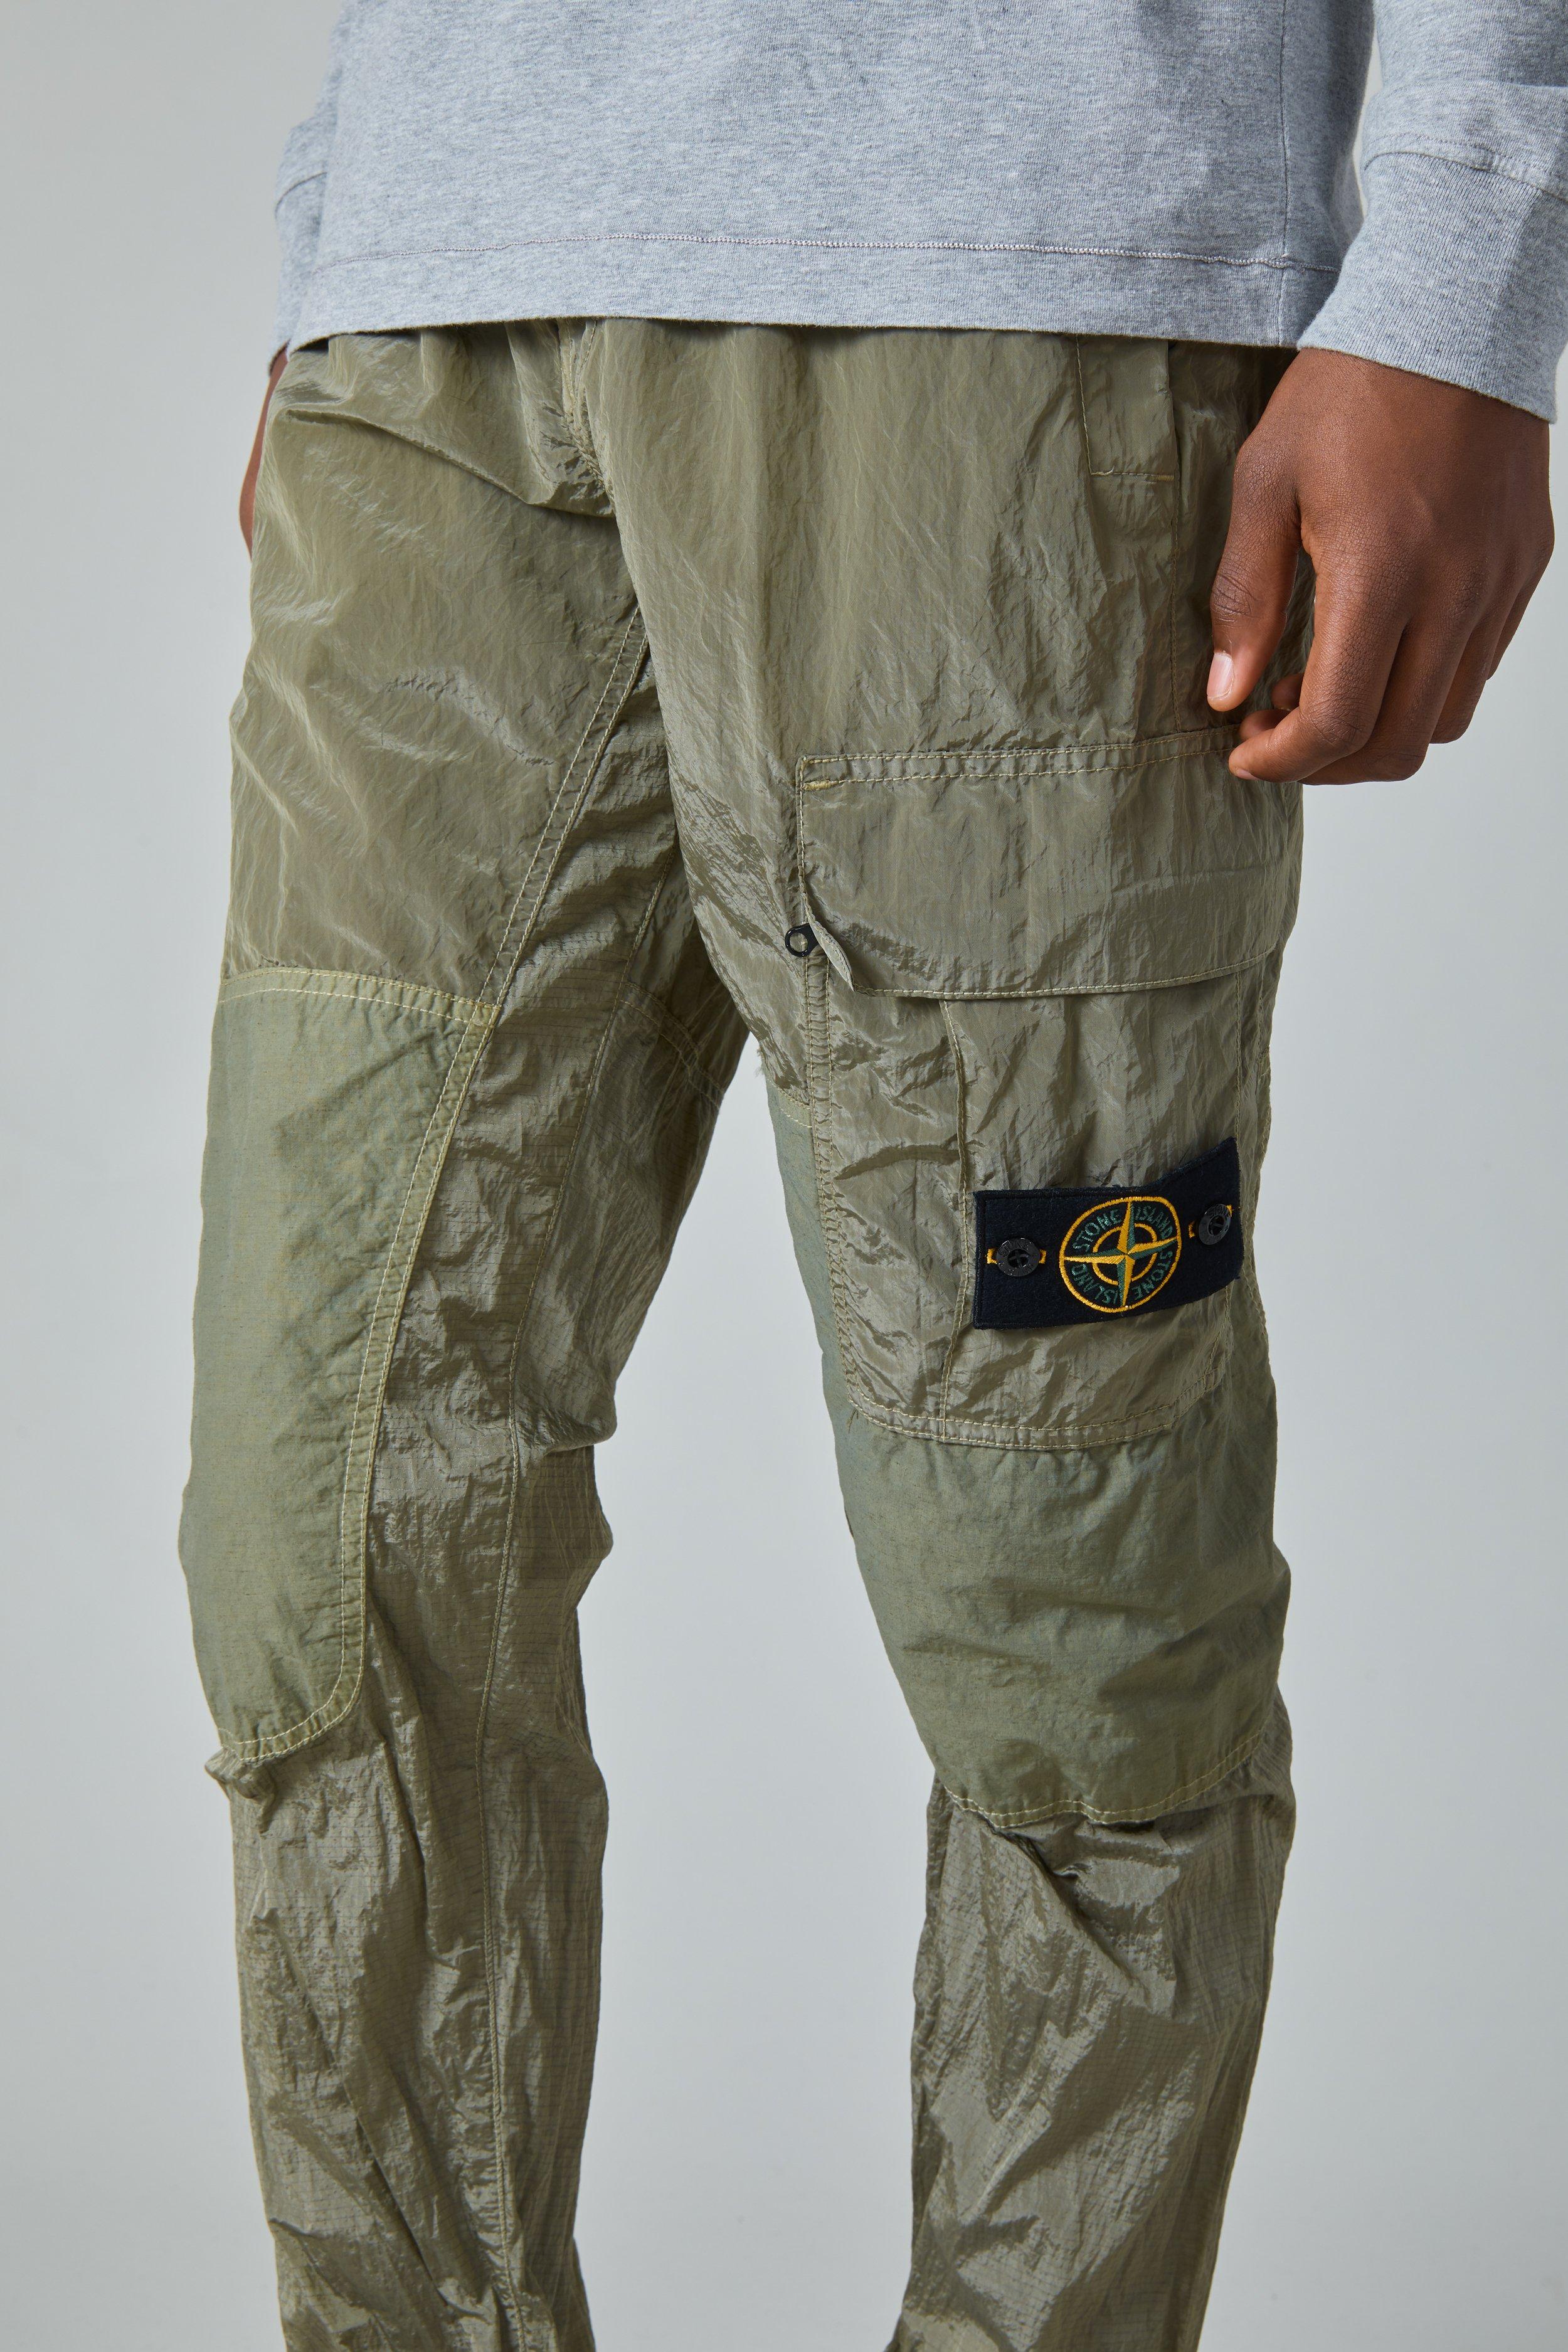 Buy > stone island nylon cargo pants > in stock